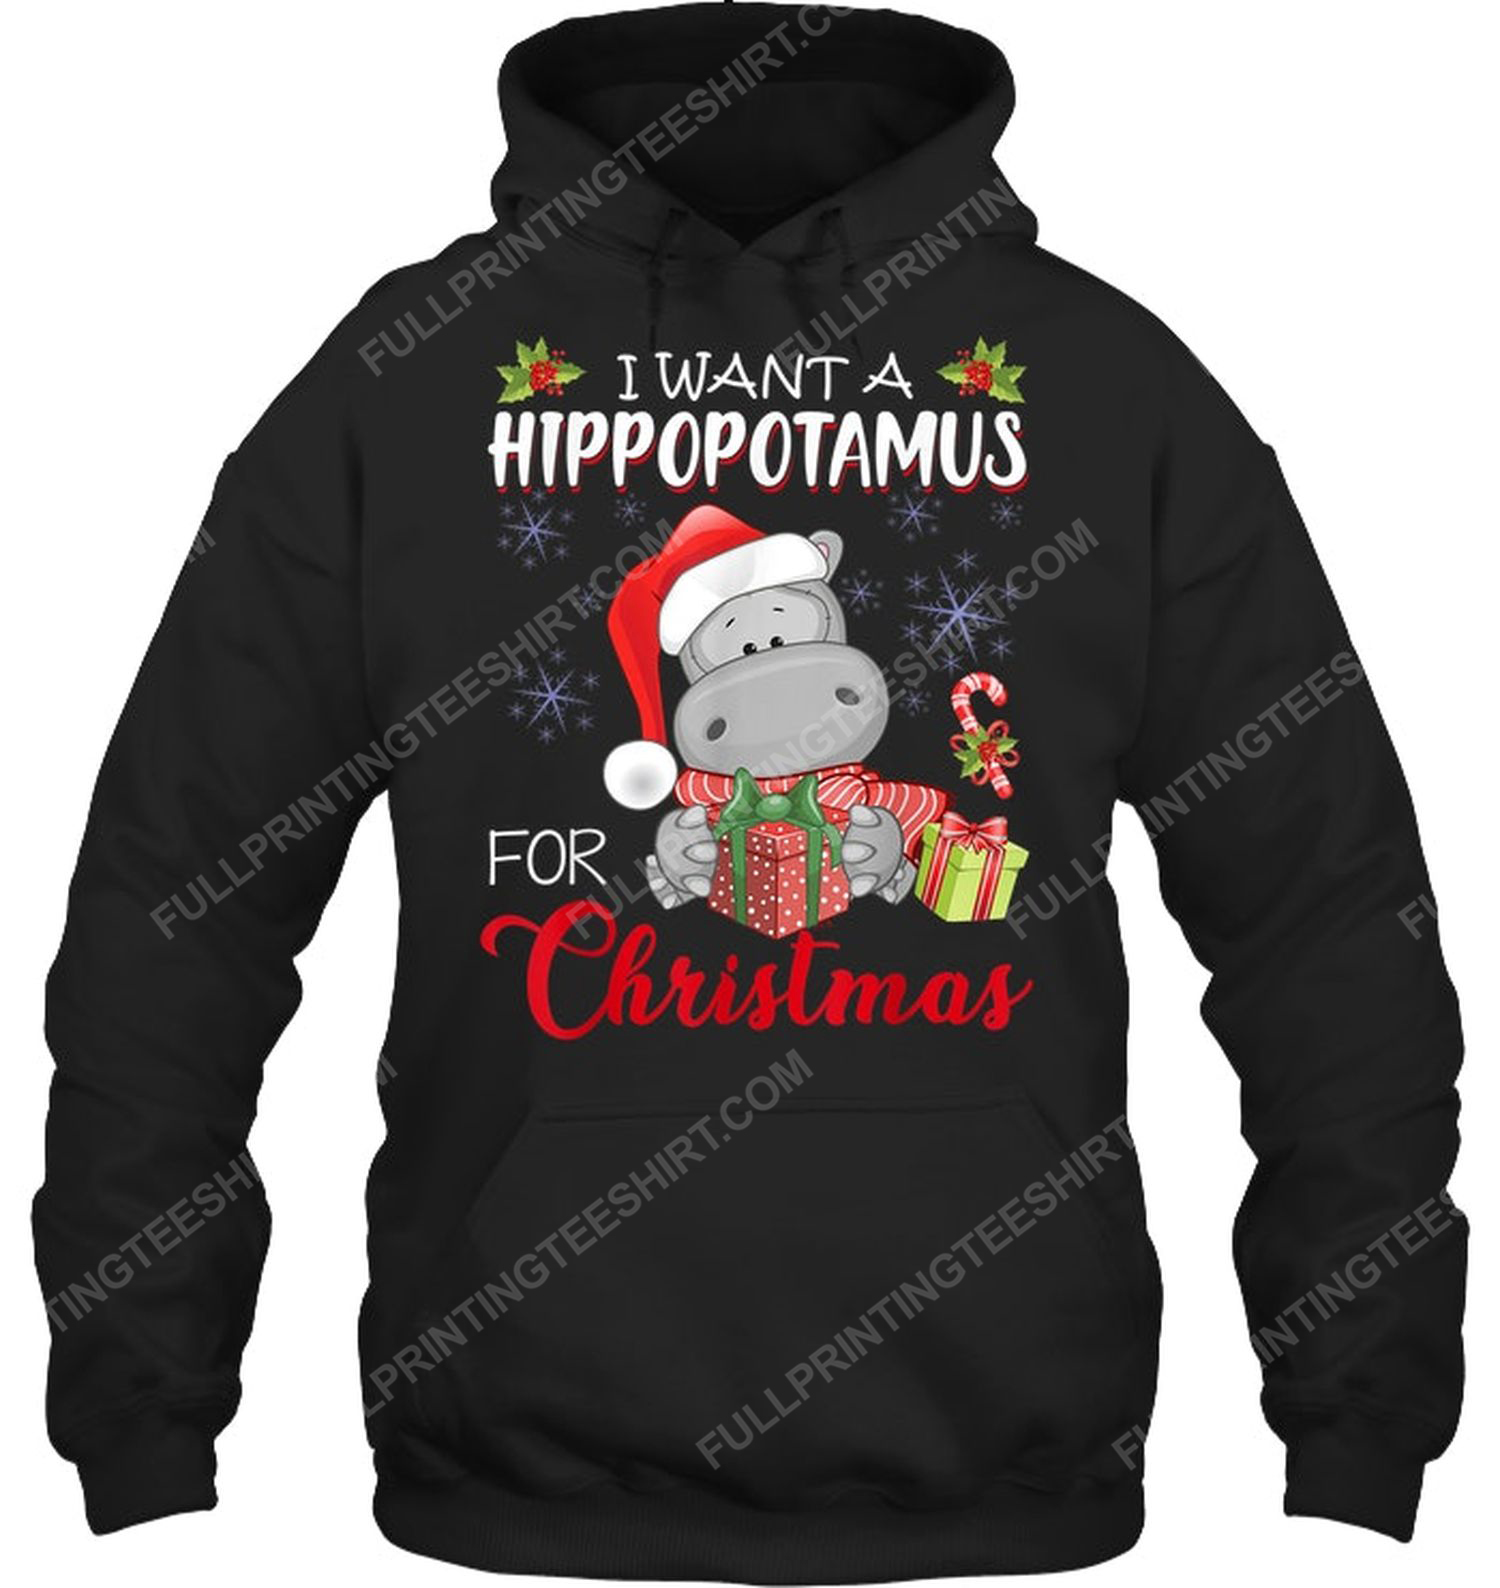 I want a hippopotamus for christmas hoodie